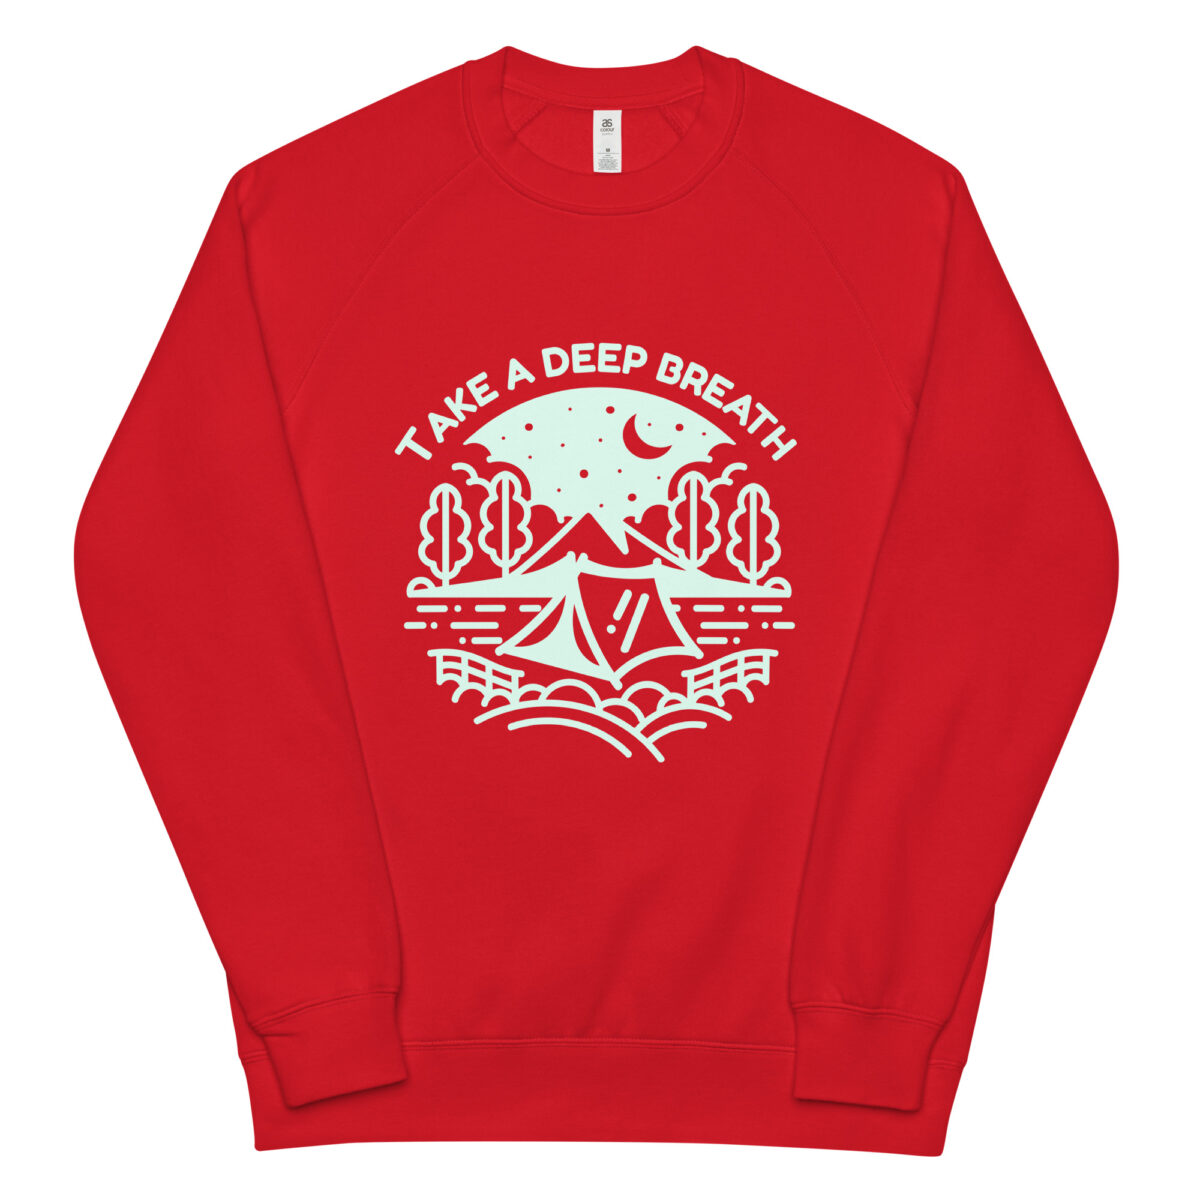 unisex raglan sweatshirt red front 643fad4fbf0a0